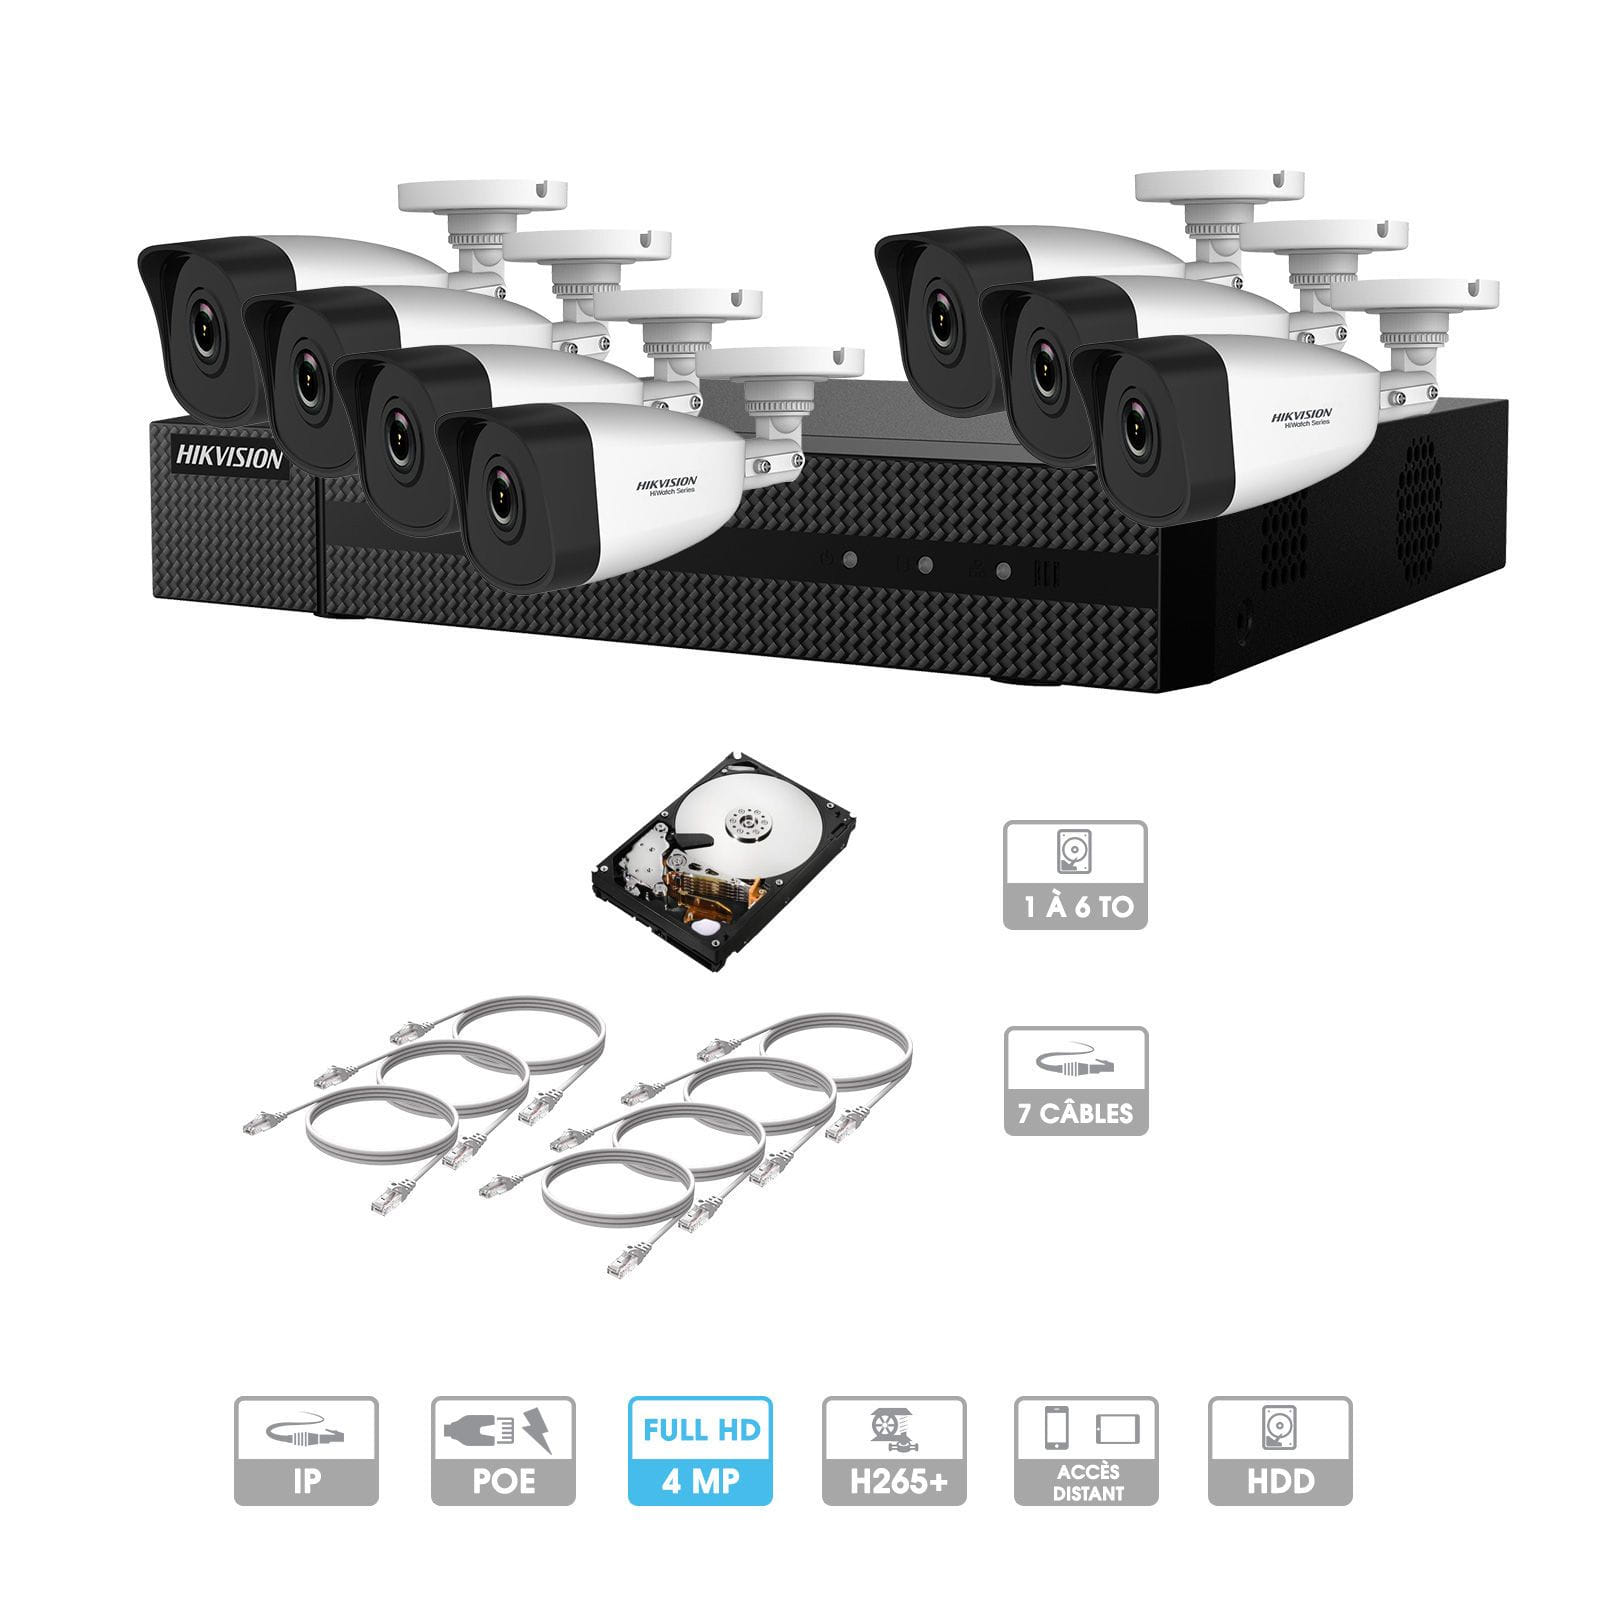 Kit vidéosurveillance 7 caméras | 4 MP | IP PoE | 7 câbles RJ45 20/30/40/50 mètres | HDD 1 à 6 To | Tube Hiwatch